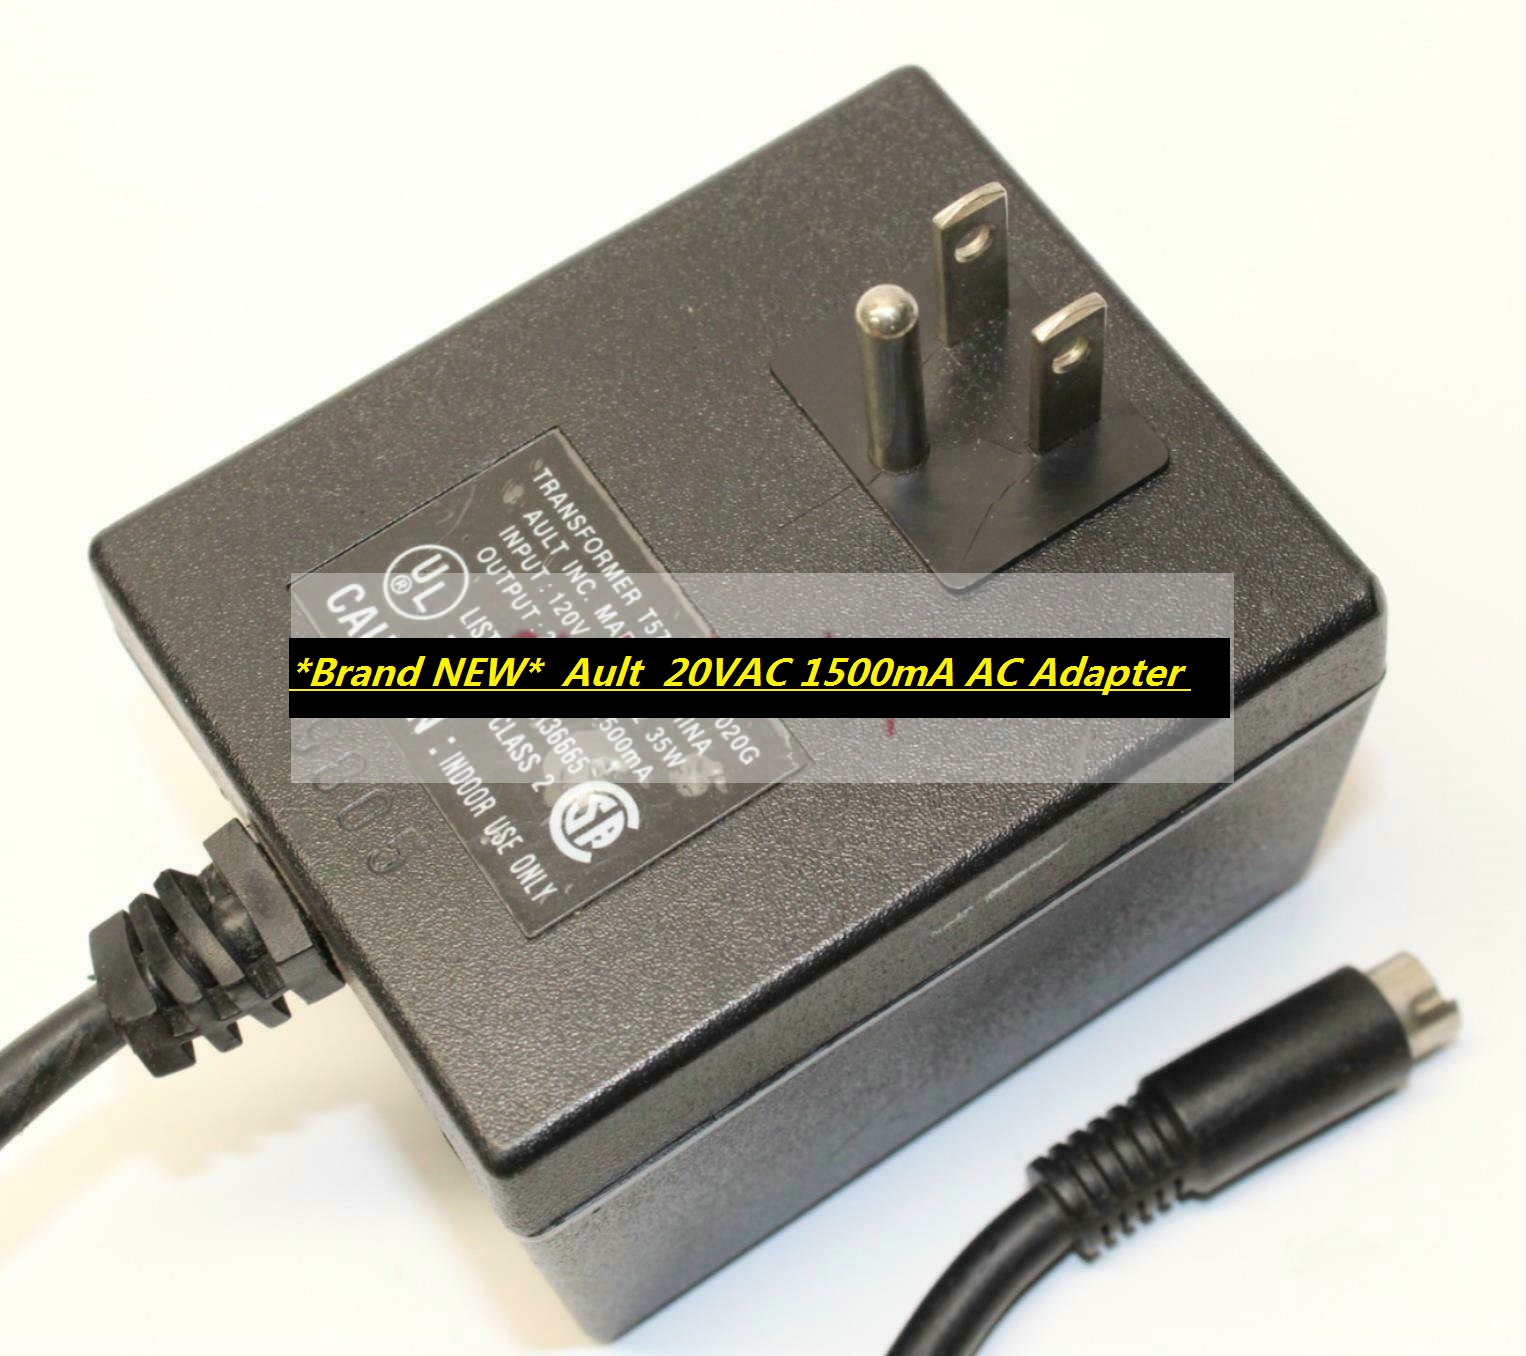 *Brand NEW* 20VAC 1500mA AC Adapter Ault T57201500C020G Class 2 Transformer Power Supply